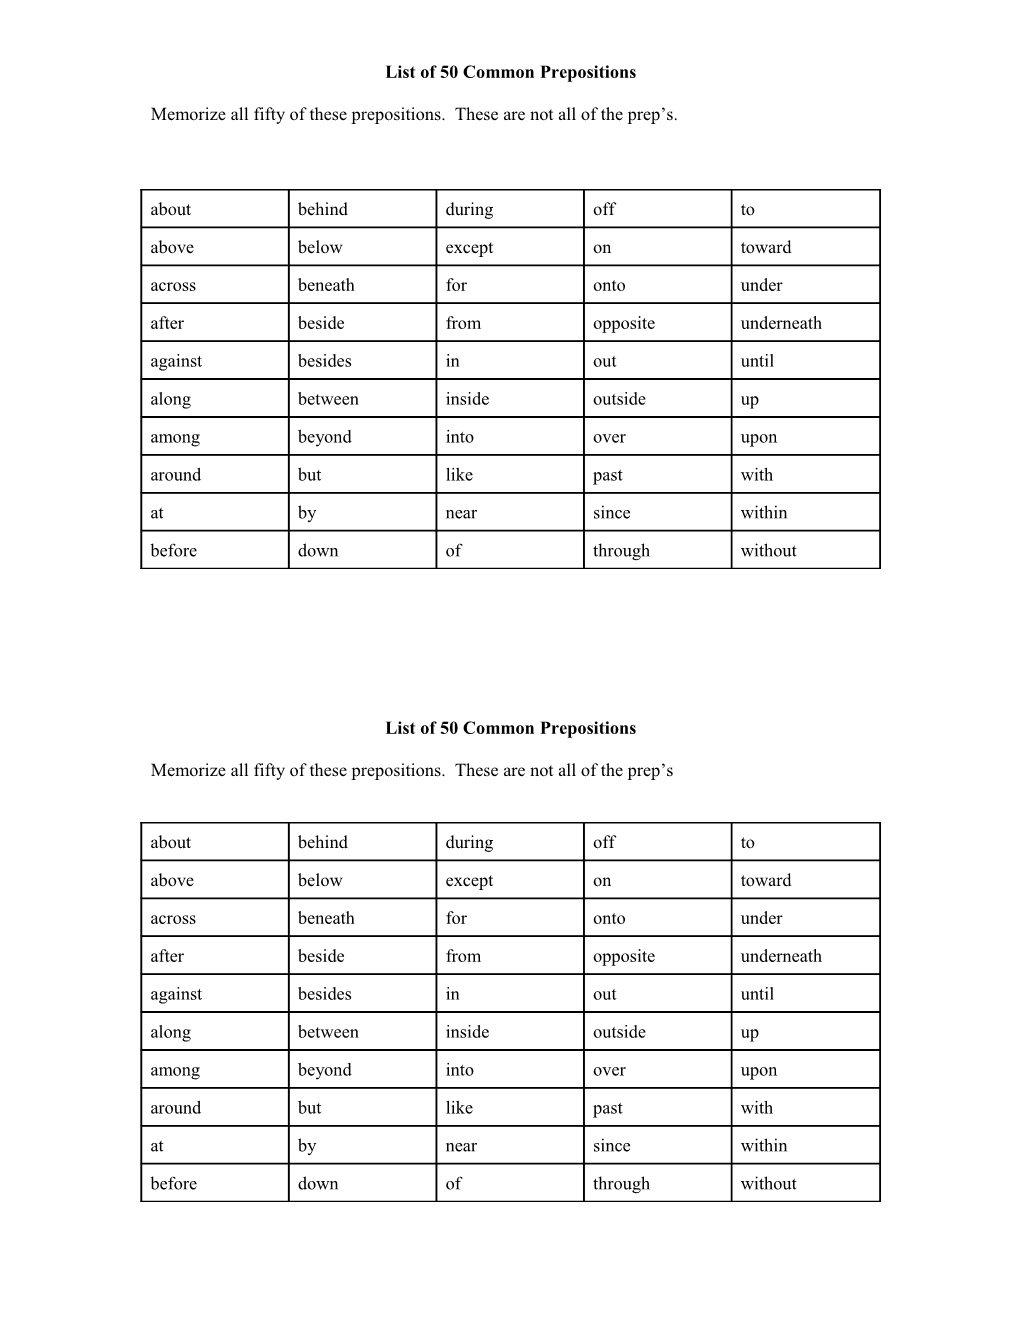 List of 50 Common Prepositions